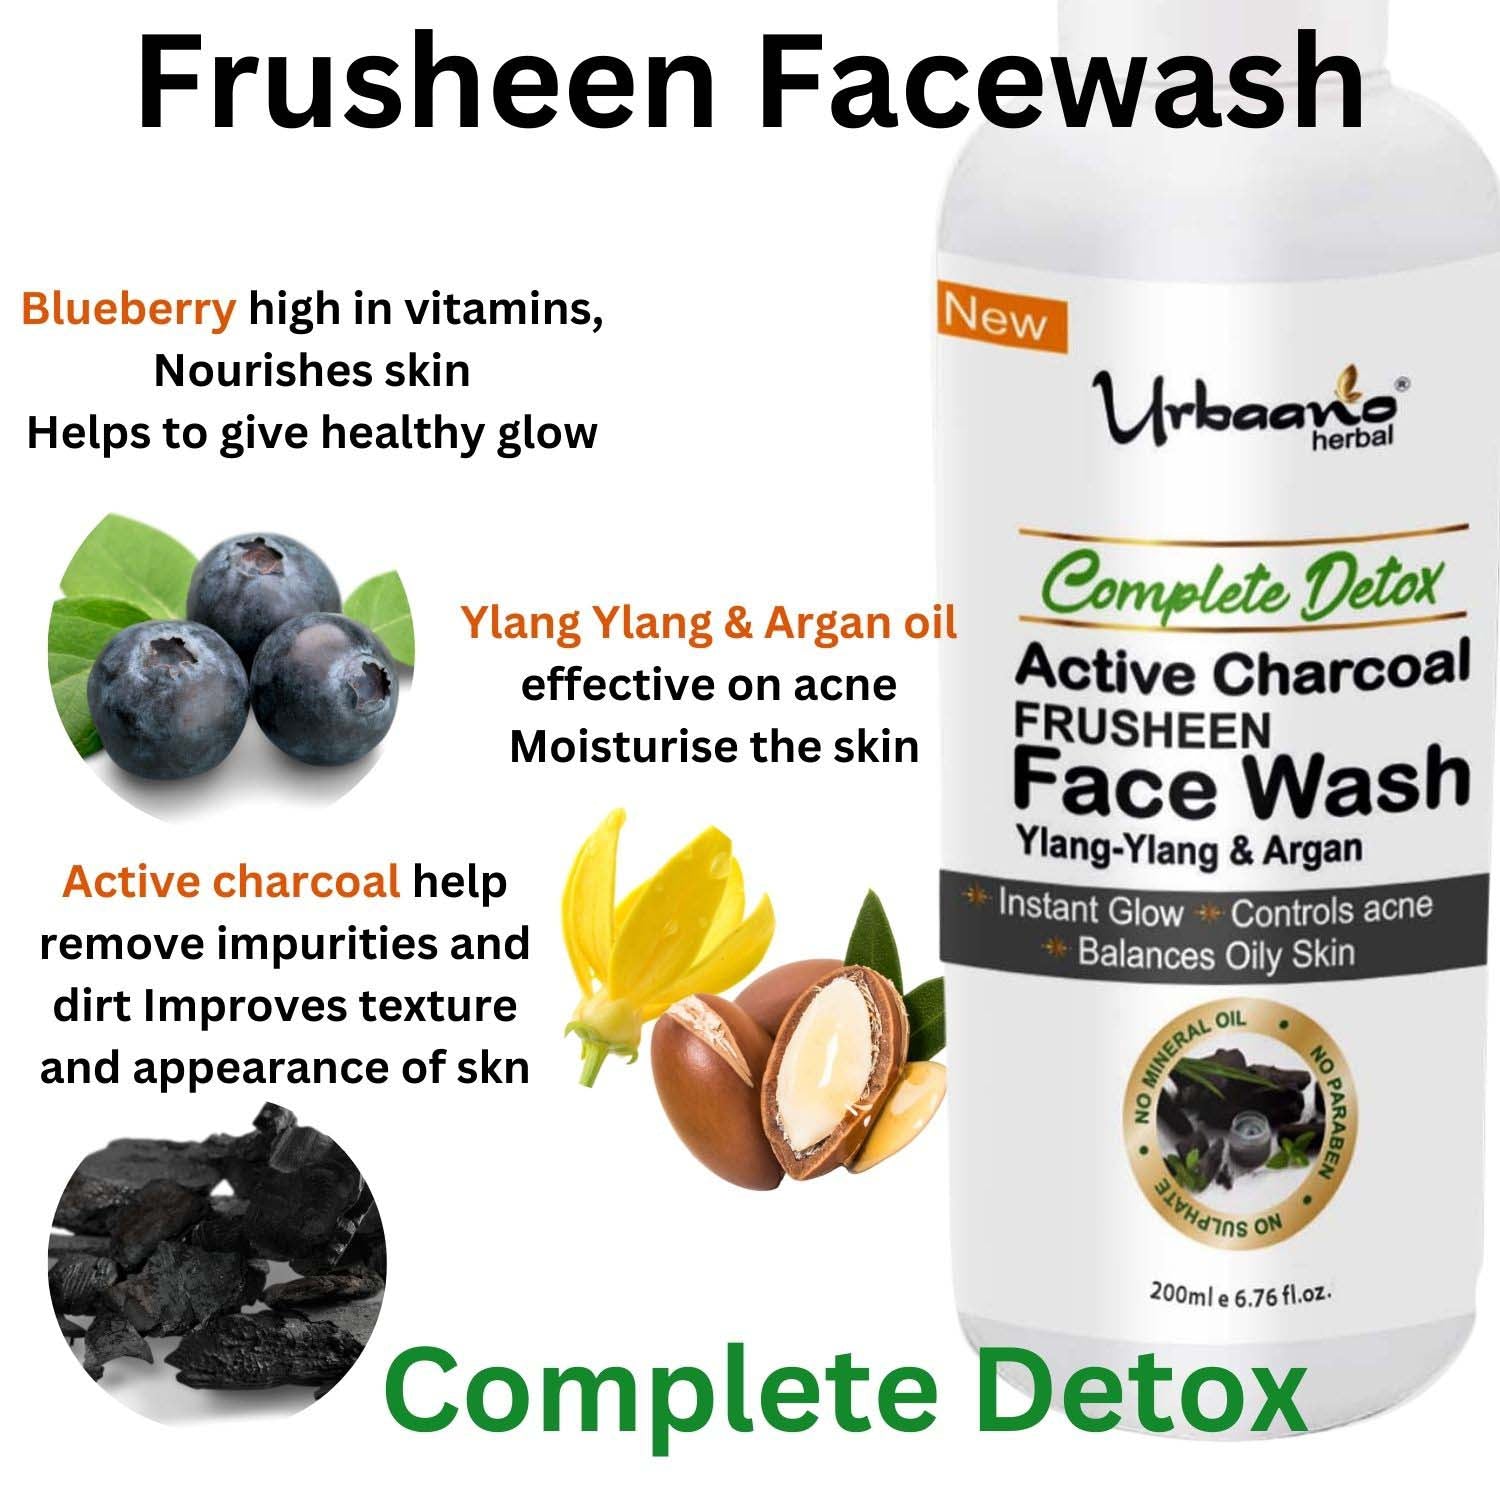 urbaano herbal aati acne charcoal frusheen face wash with blueberry, ylang ylang, argan oil